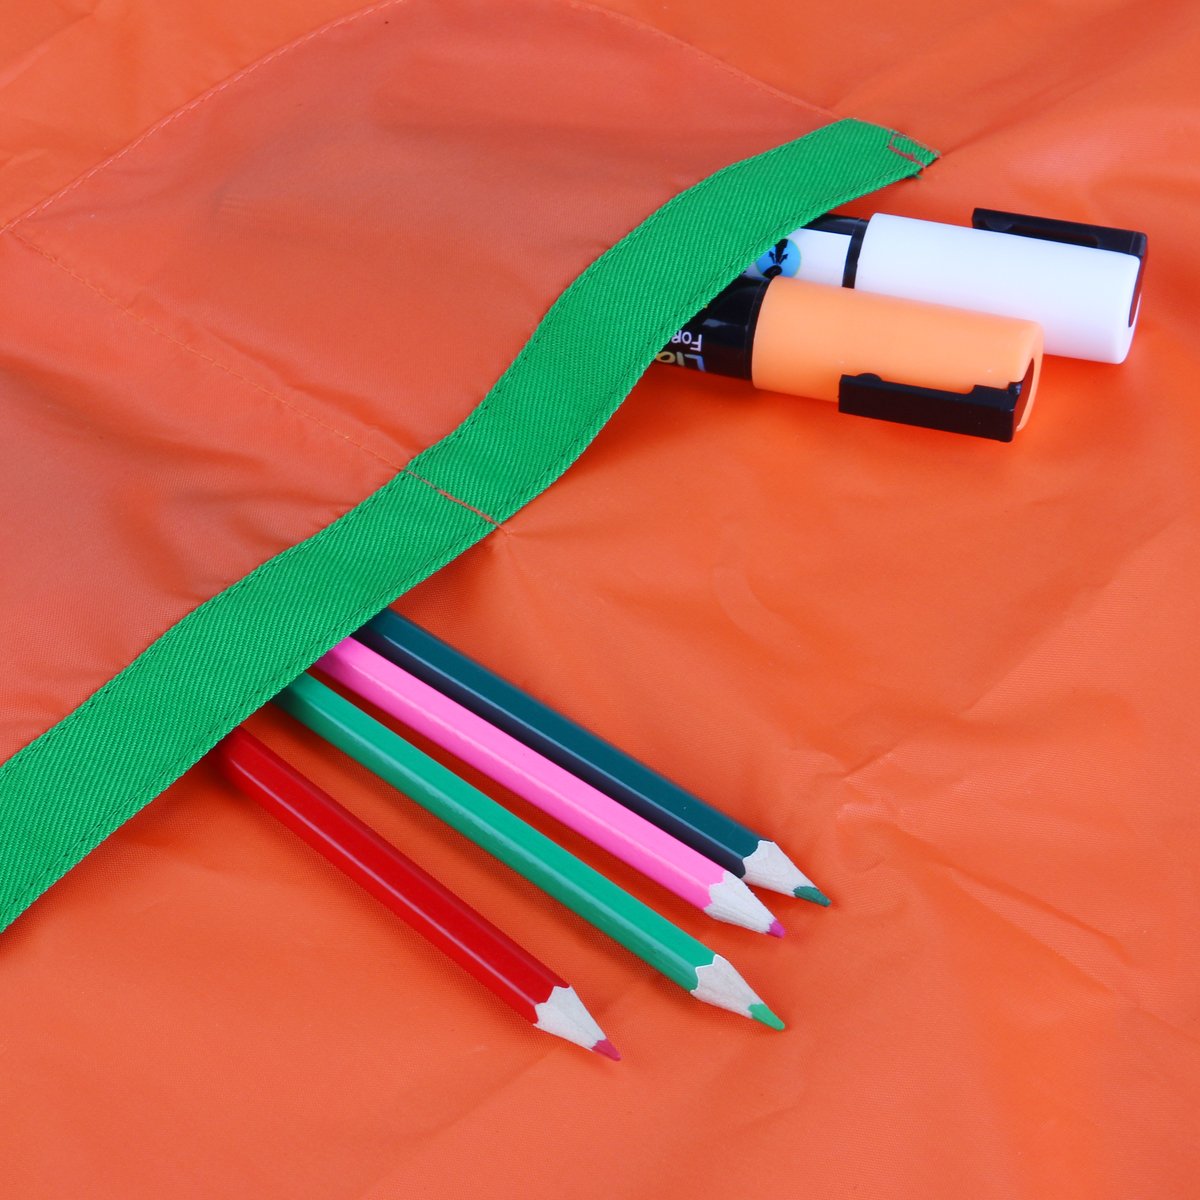 UEETEK Children Kids Waterproof Art Craft Smock Apron for DIY Painting Drawing with Sleevelet(Orange)